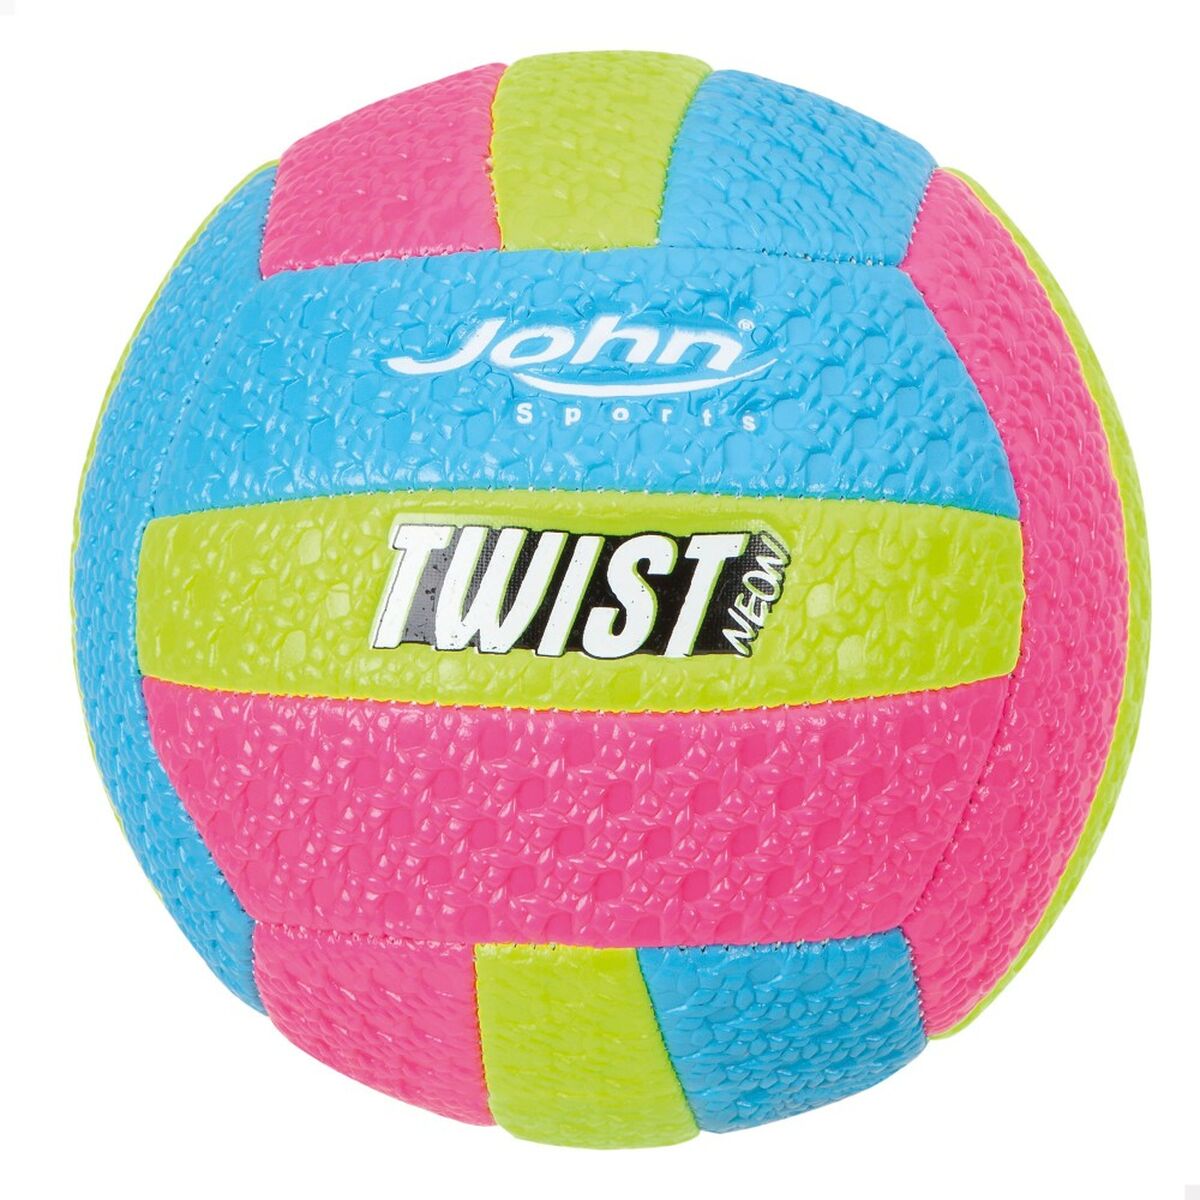 Volleyball John Sports 5 Ø 22 cm (12 Stück)